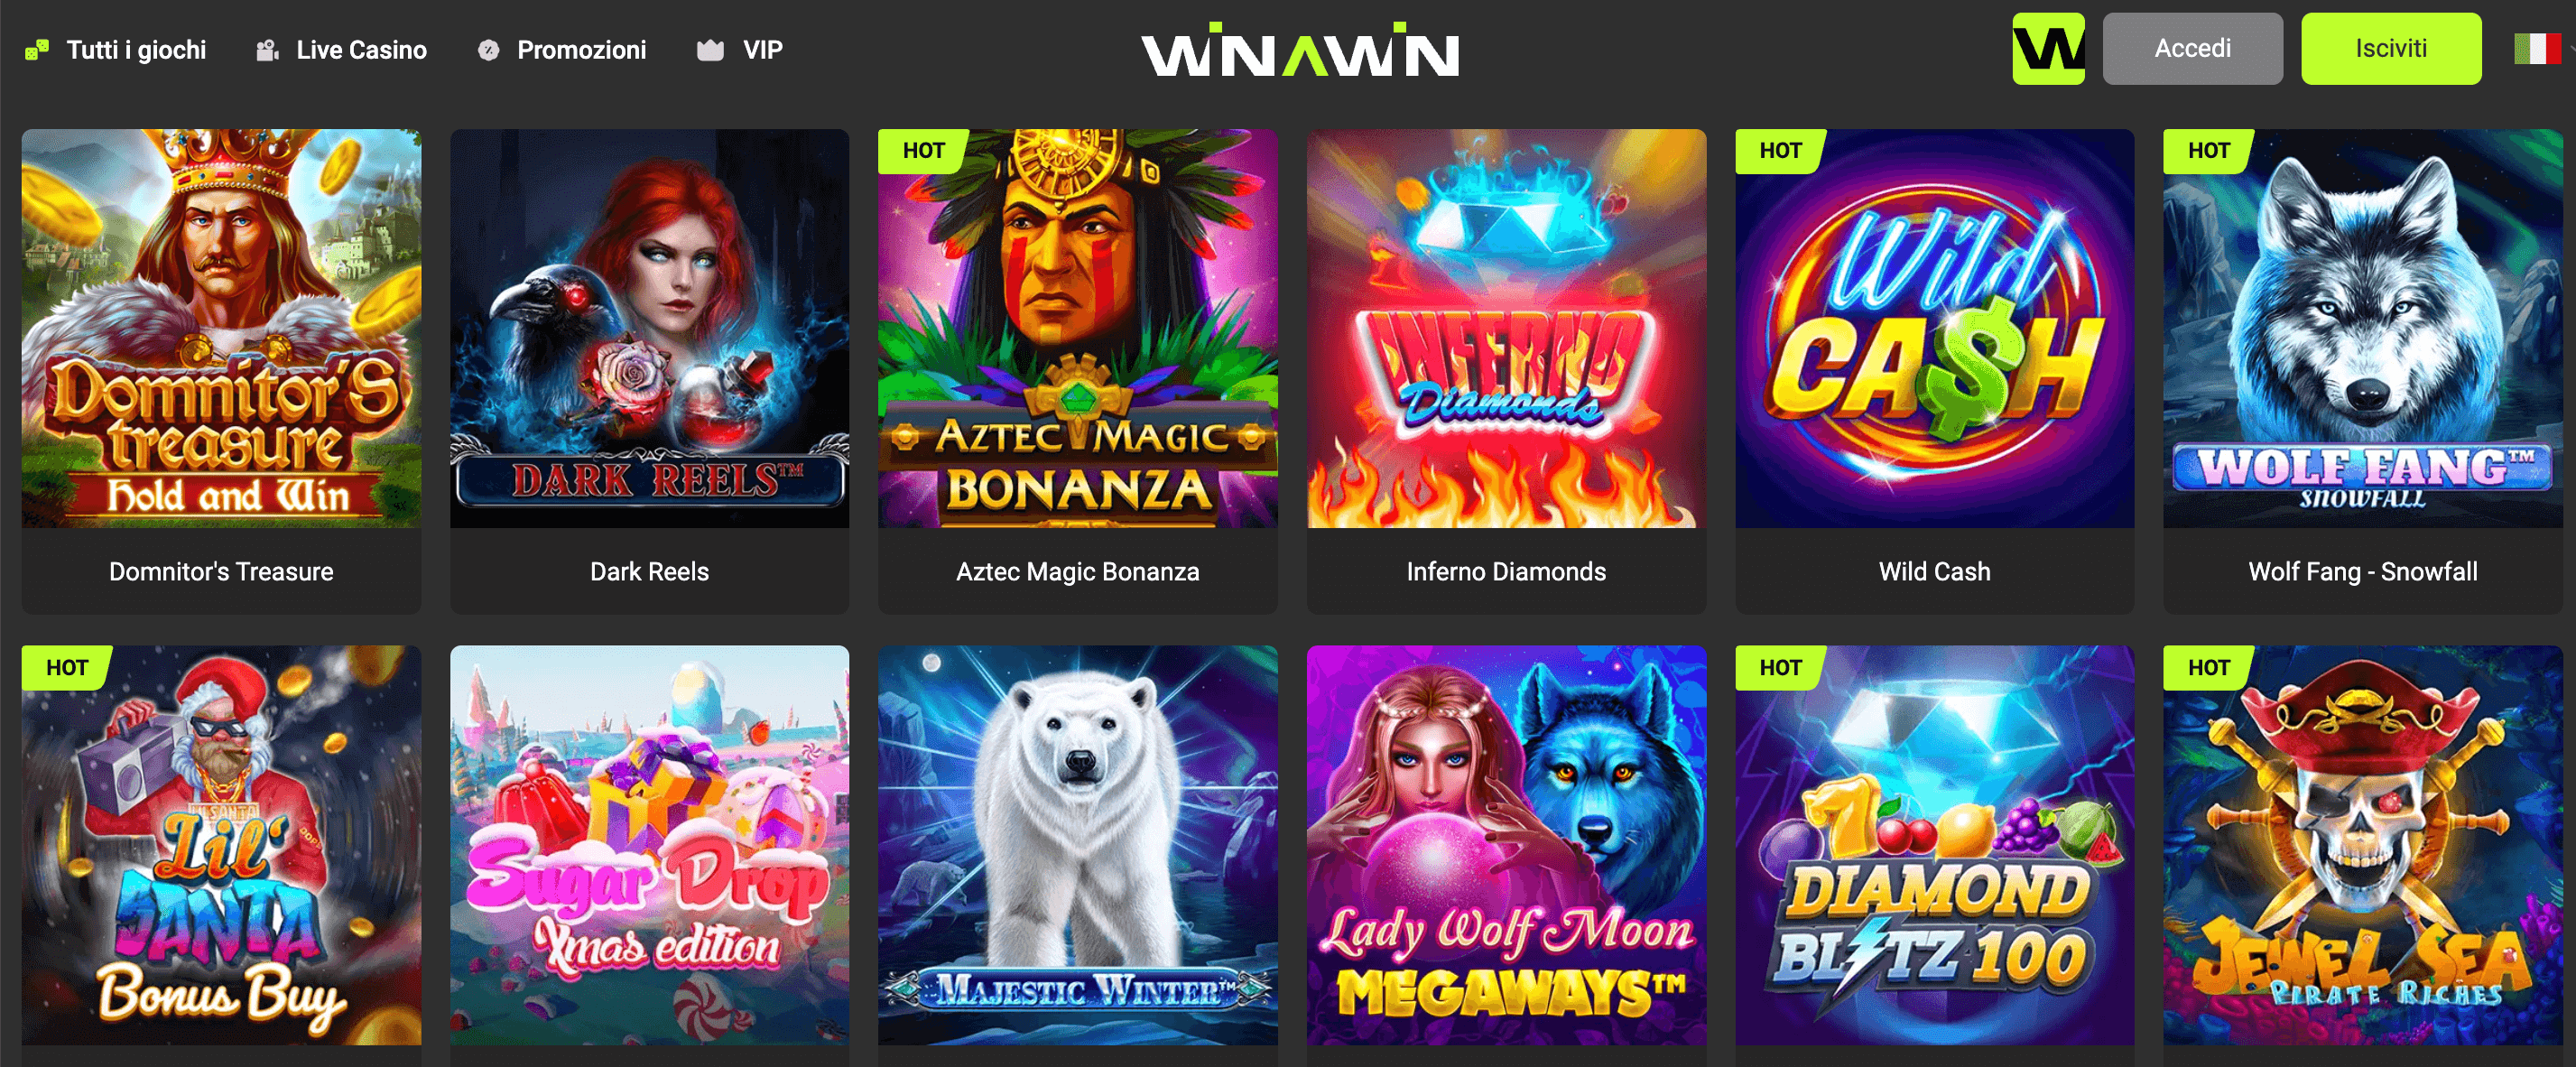 Winawin Casino Slot